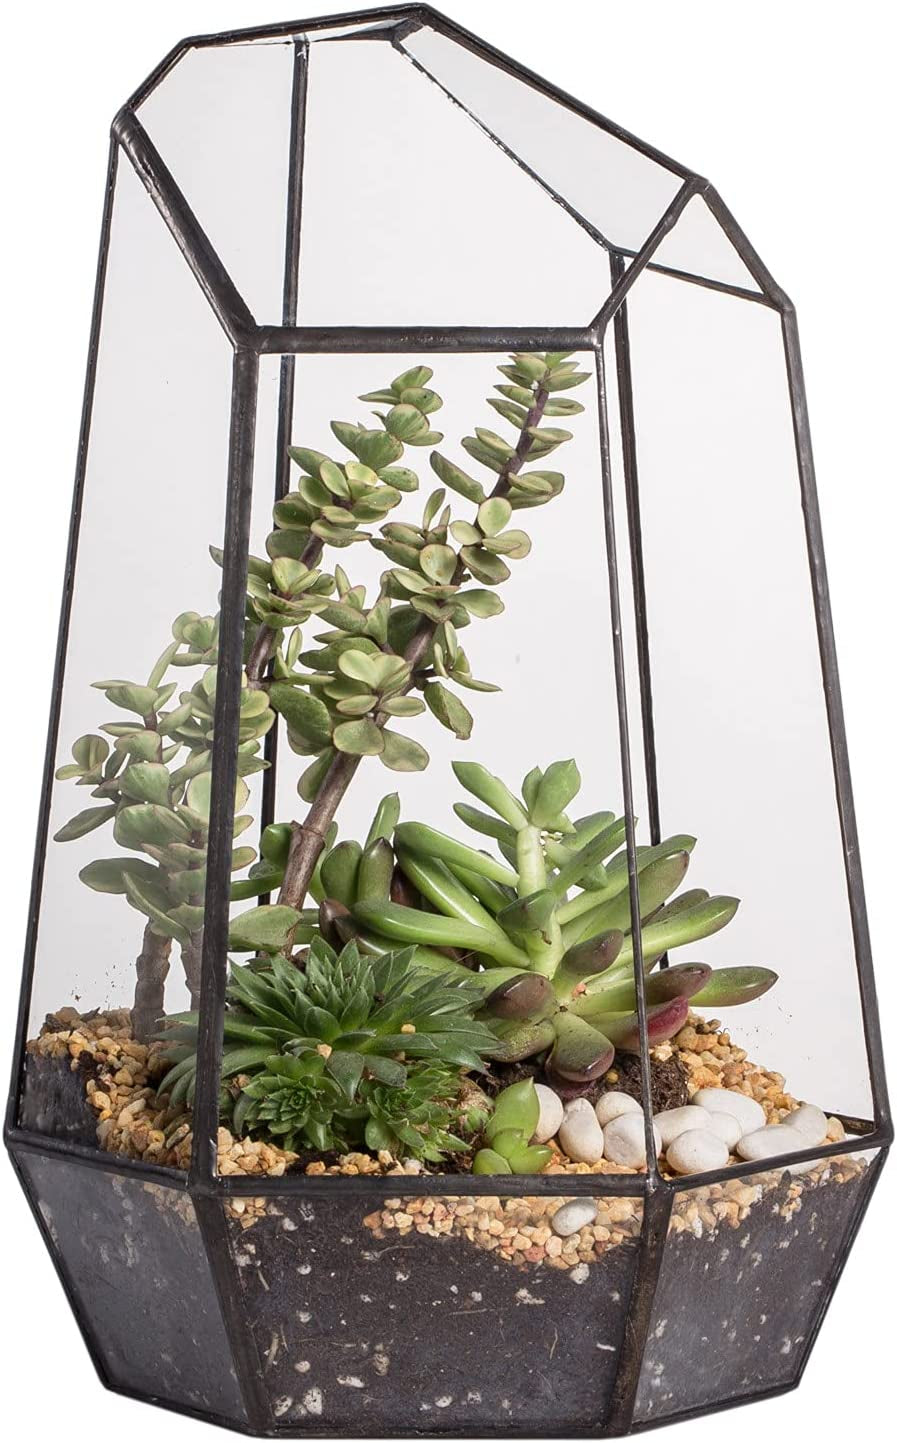 Geometric Plants Terrarium Planter - Glass Terrarium for Succulent, Cacti - 6.5X5.7X9.8 Inches - Indoor Tabletop Irregular Opened Container Pot for Home, Garden, Office Decor, Black (No Plants)